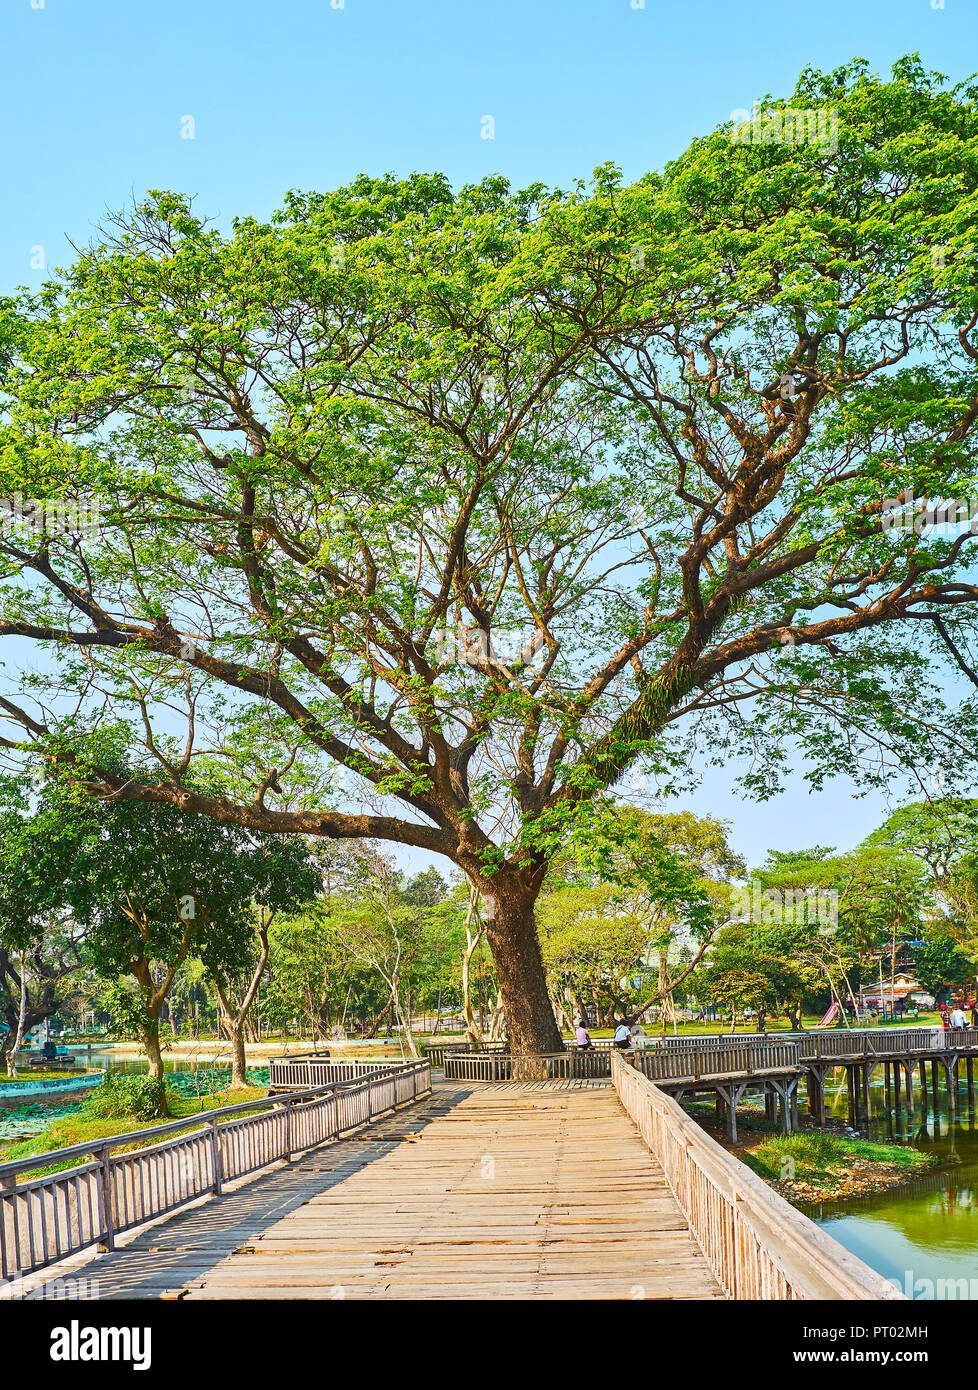 The sprawling acacia leucophloea (htanaung) tree amid the old creaking timber bridge across Kandawgyi Lake, Yangon, Myanmar. Stock Photo